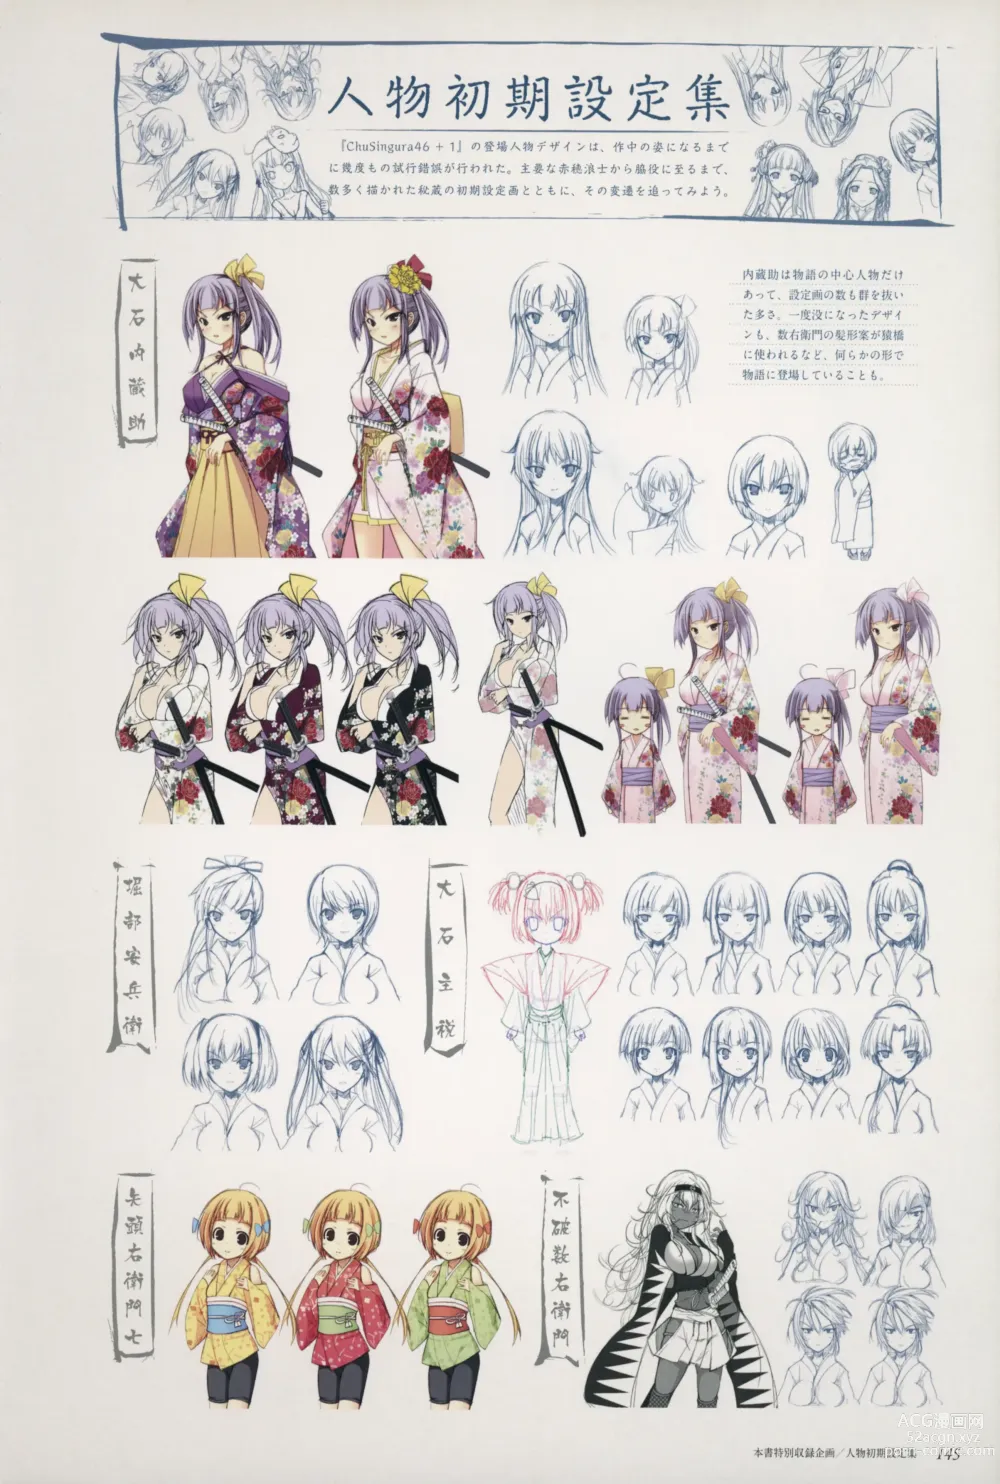 Page 147 of manga ChuSinGura 46+1 Official Visual Fan Book